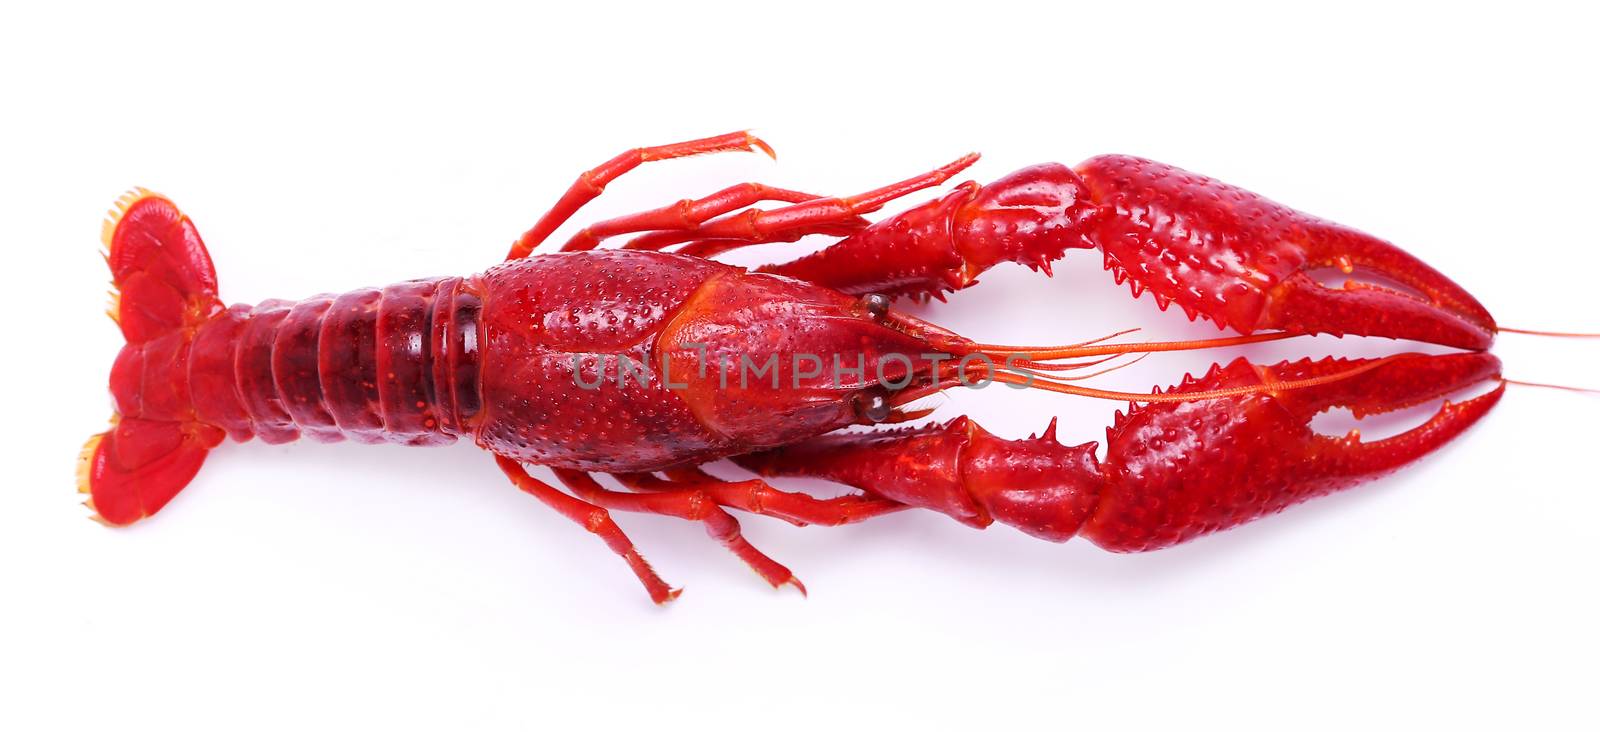 Delicious crayfish by rufatjumali